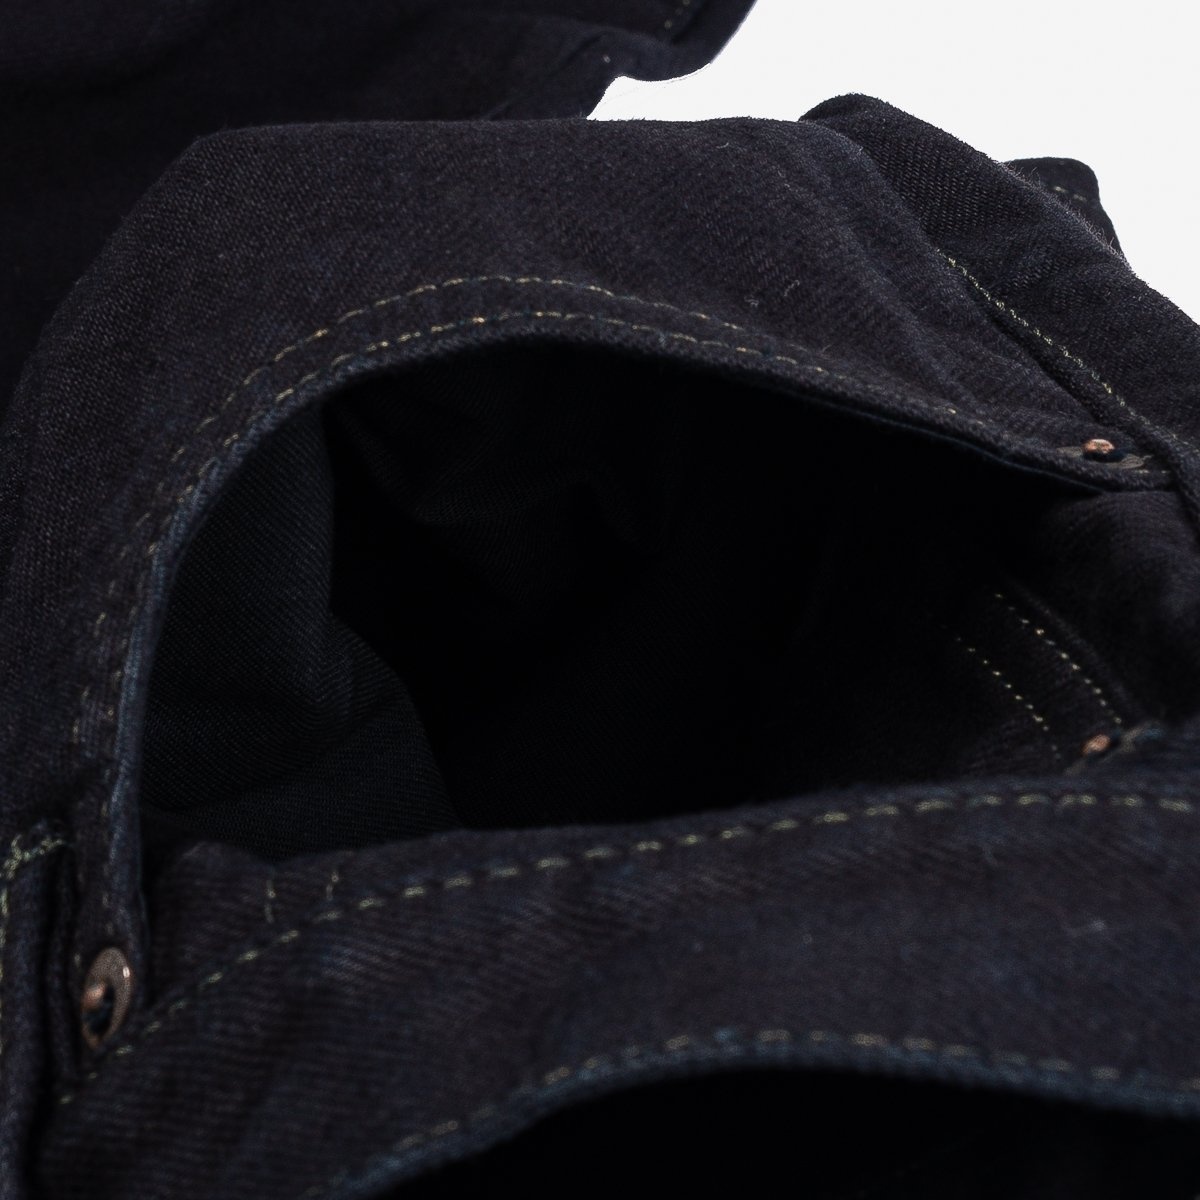 IH-666S-142od 14oz Selvedge Denim Slim Straight Cut Jeans - Indigo Overdyed Black - 15